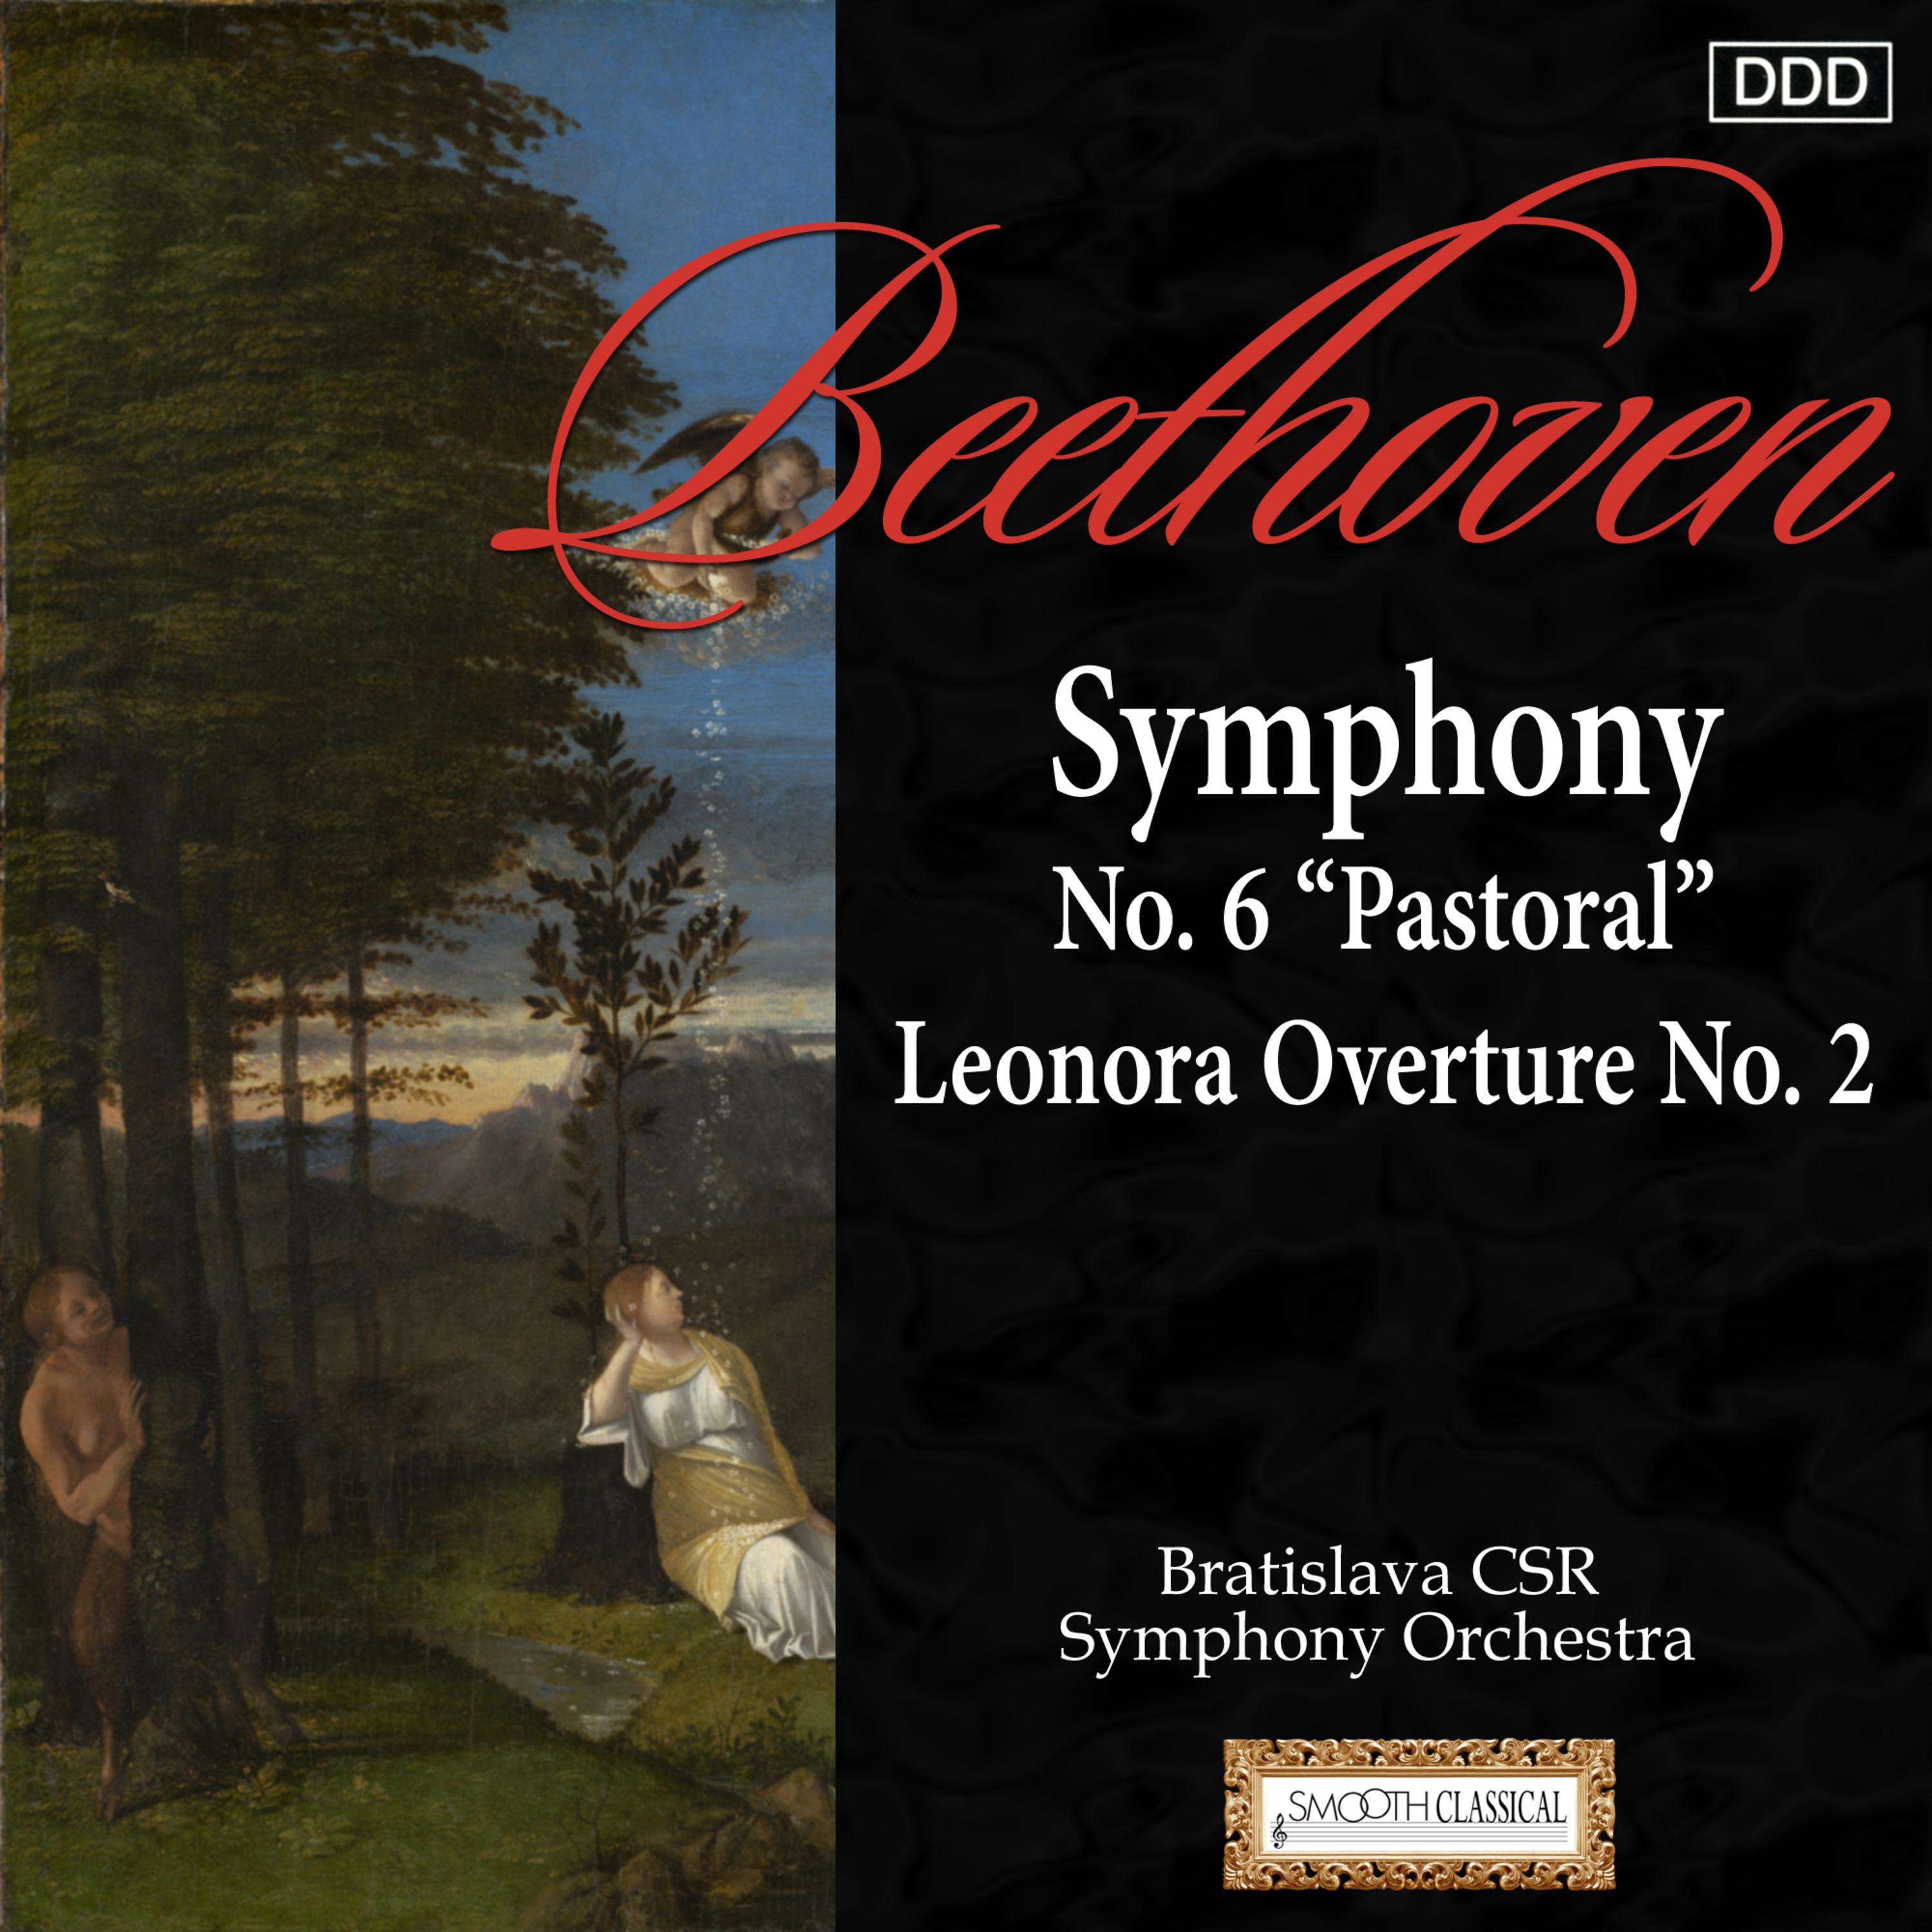 Beethoven: Symphony No. 6 "Pastoral" - Leonora Overture No. 2